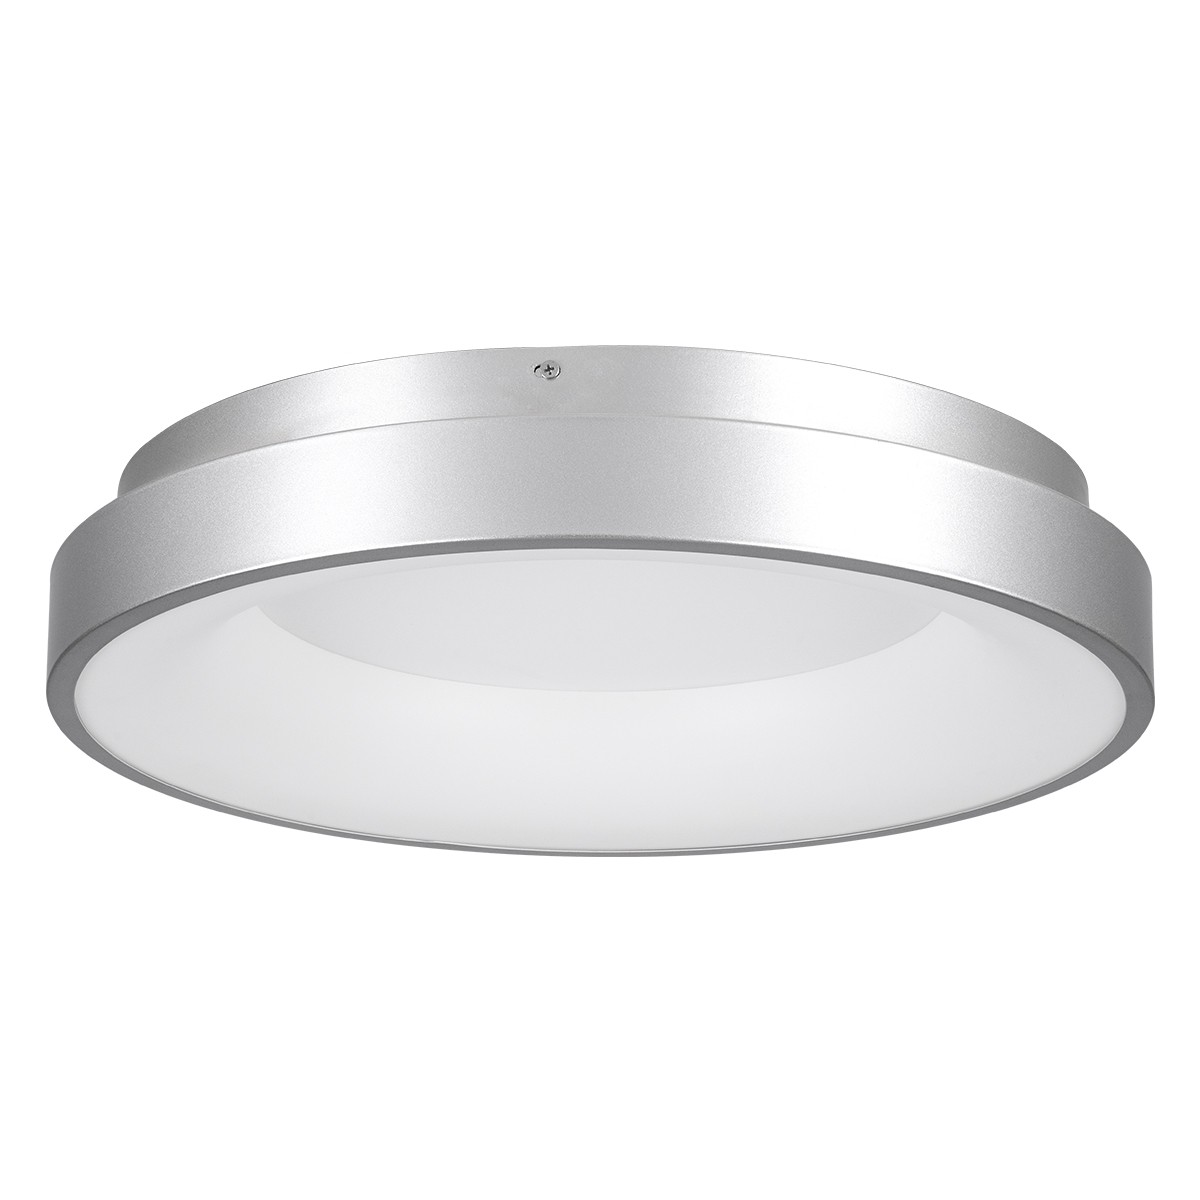 LED Πλαφονιέρα Οροφής SALEM 75W με Εναλλαγή Φωτισμού Dimmable Φ45cm - Ασημί  61234